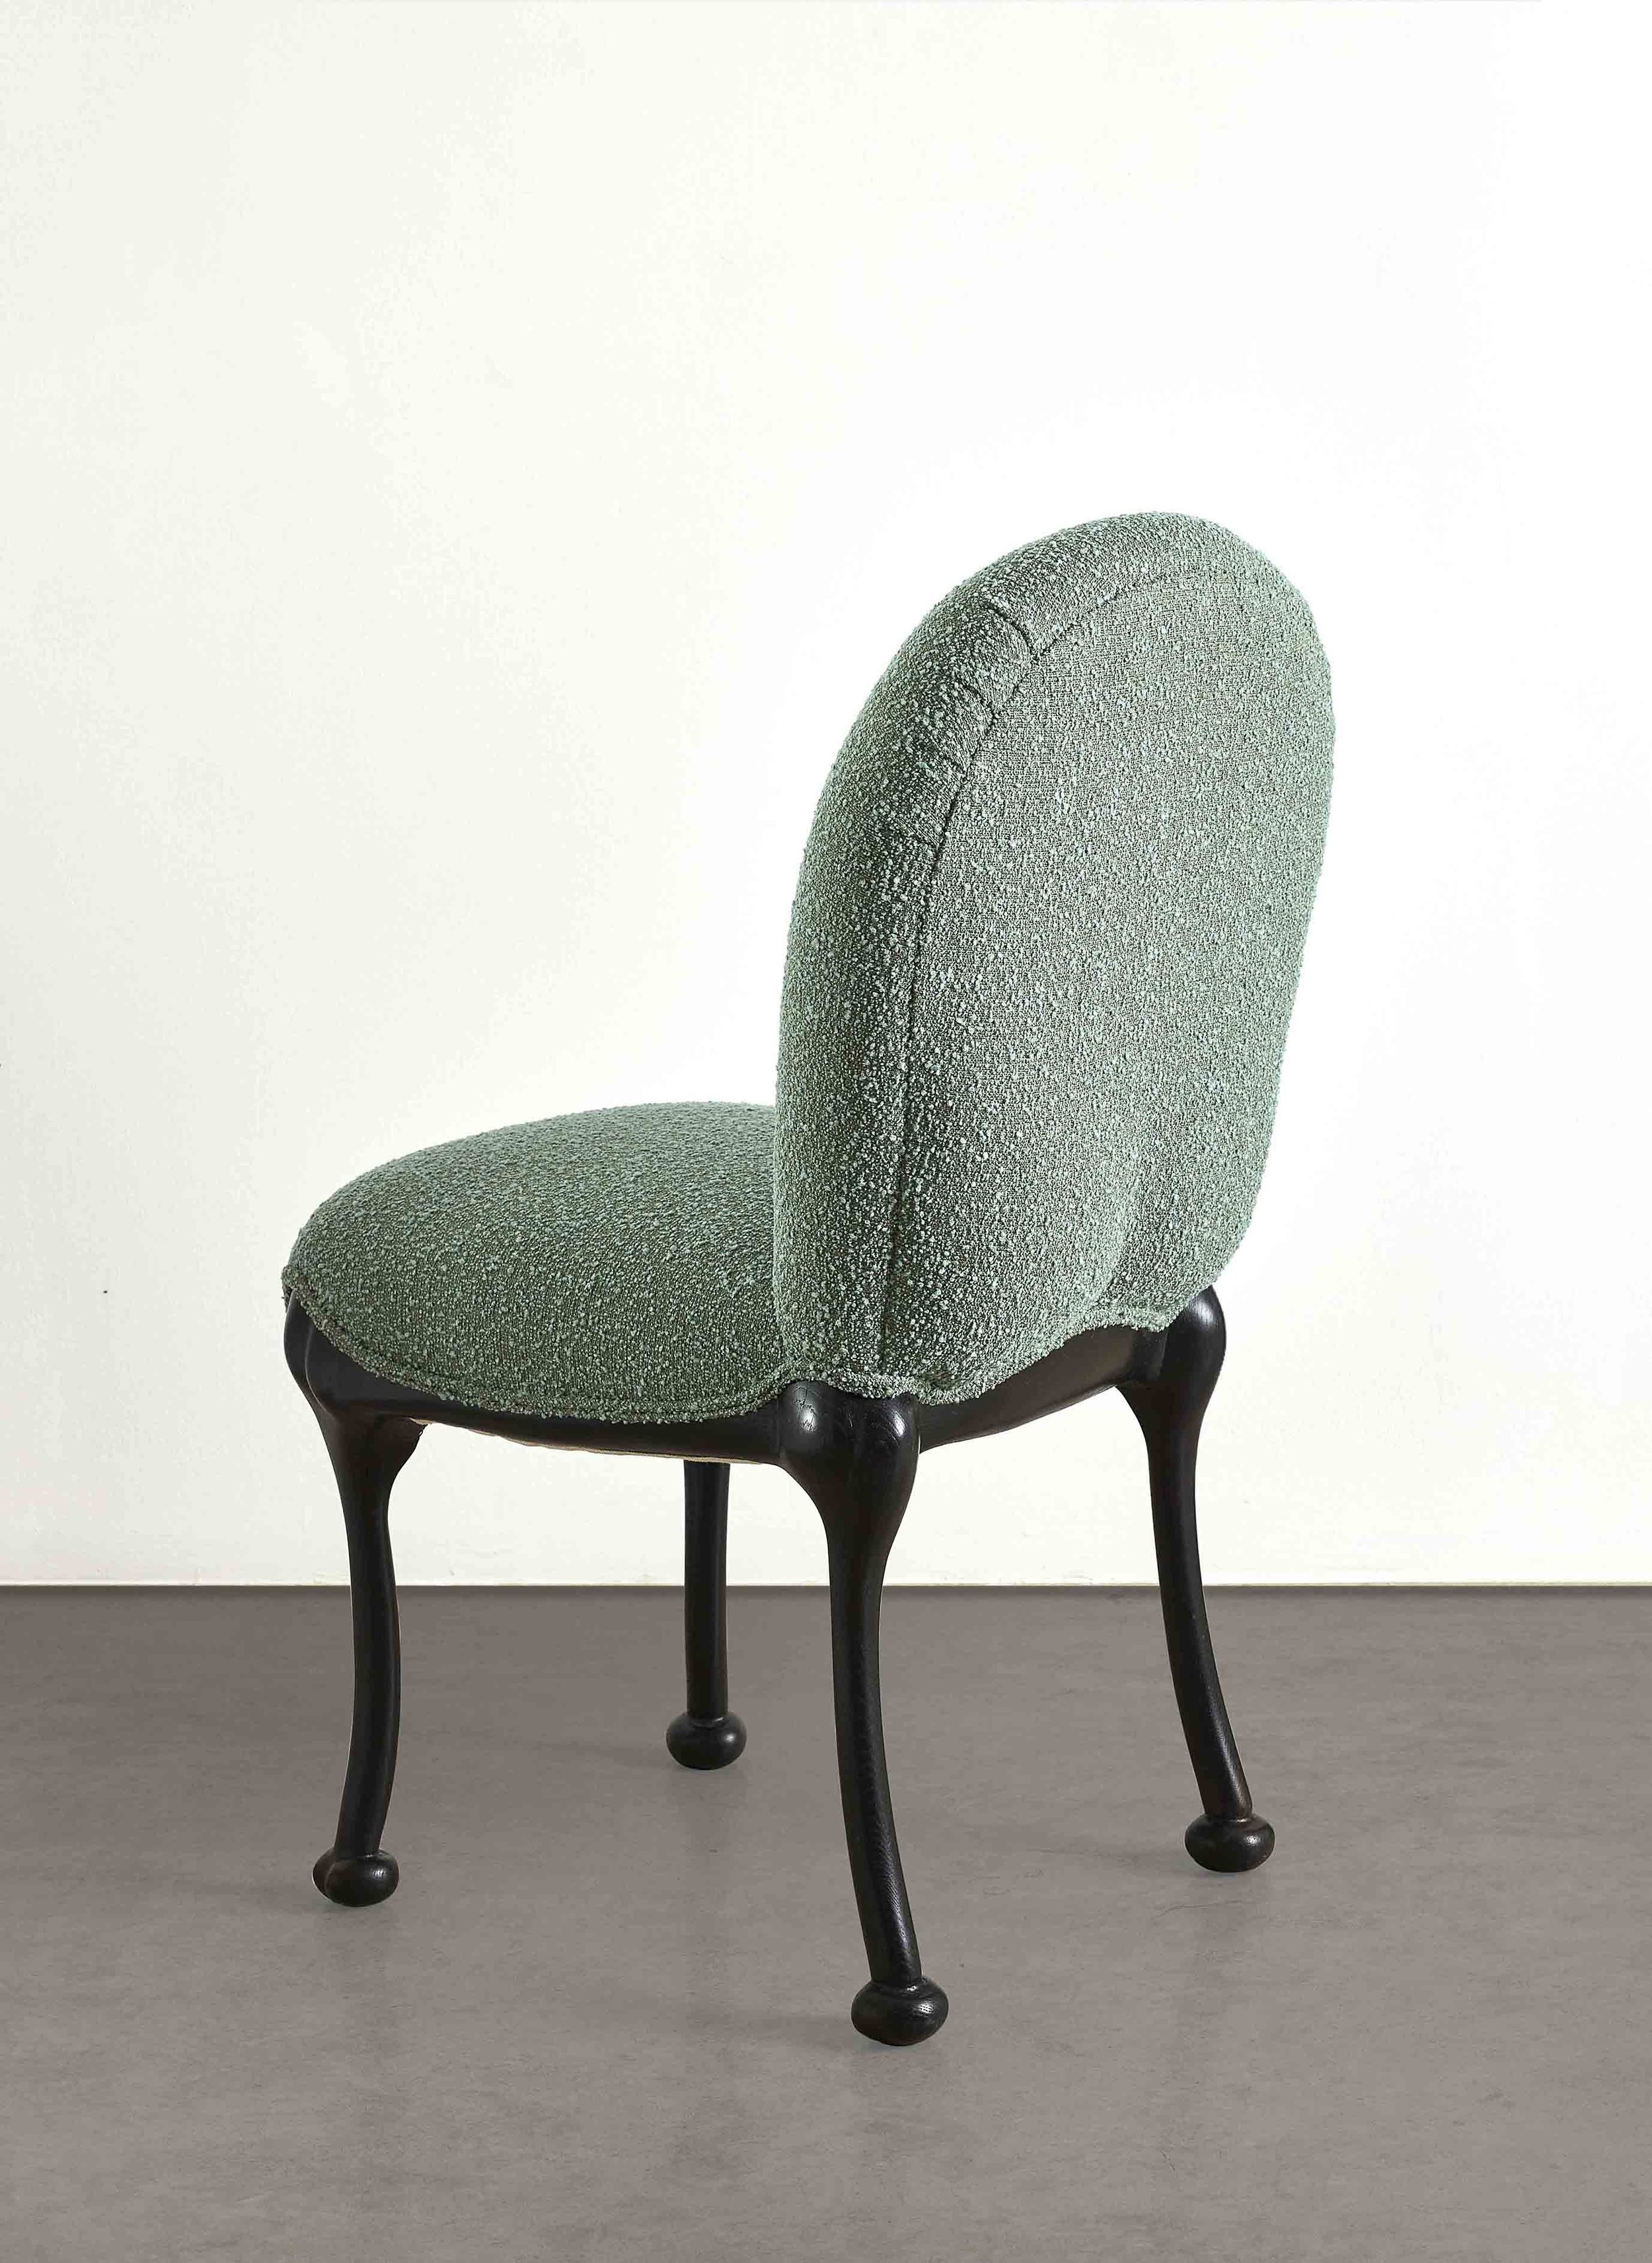 3.MB Chair 'Buttocks'.jpg